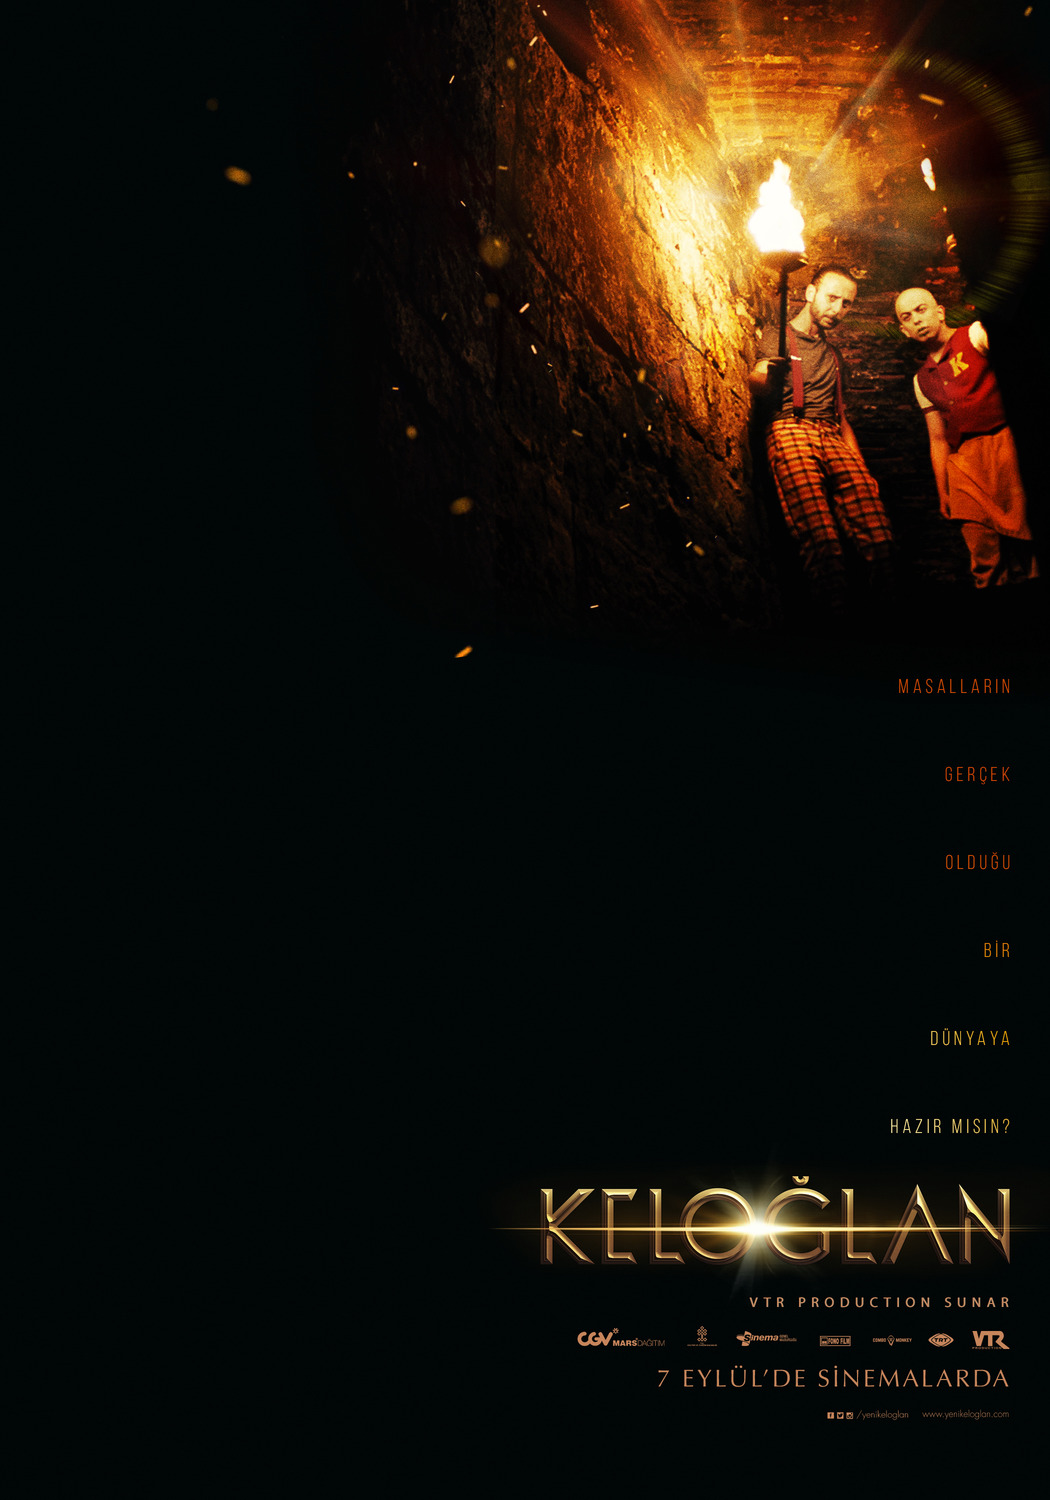 Extra Large Movie Poster Image for Keloglan (#5 of 6)